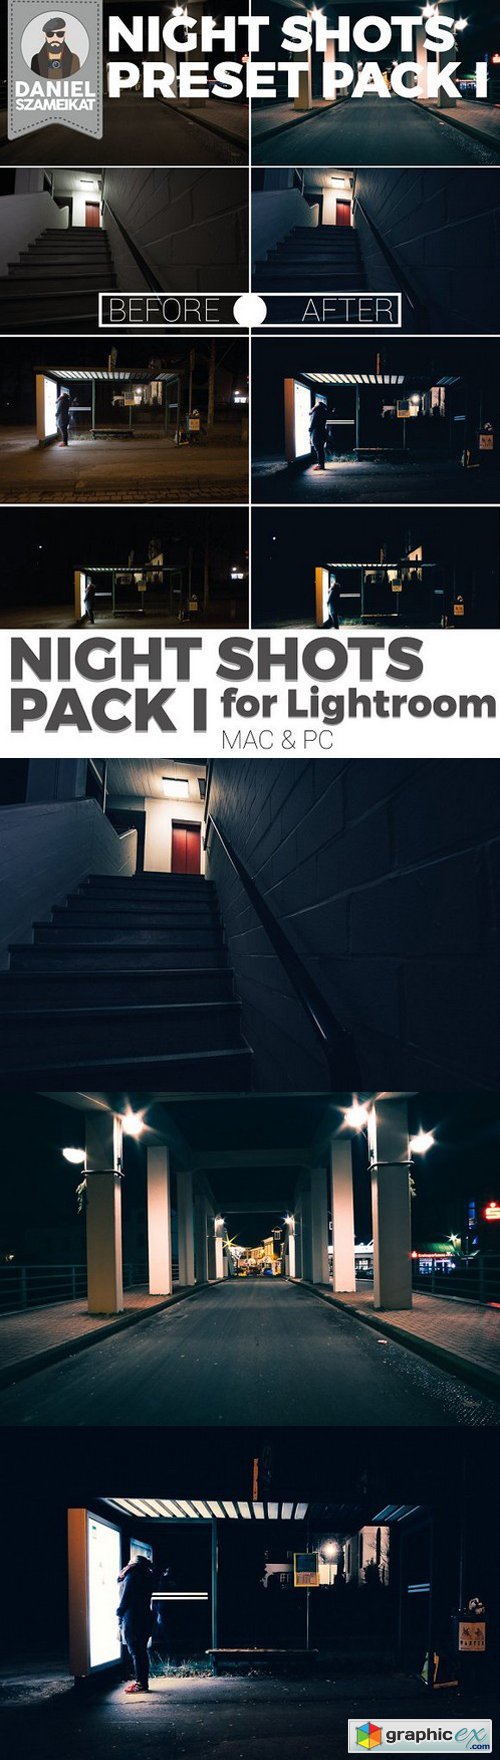 Night Shot Lightroom Preset Pack